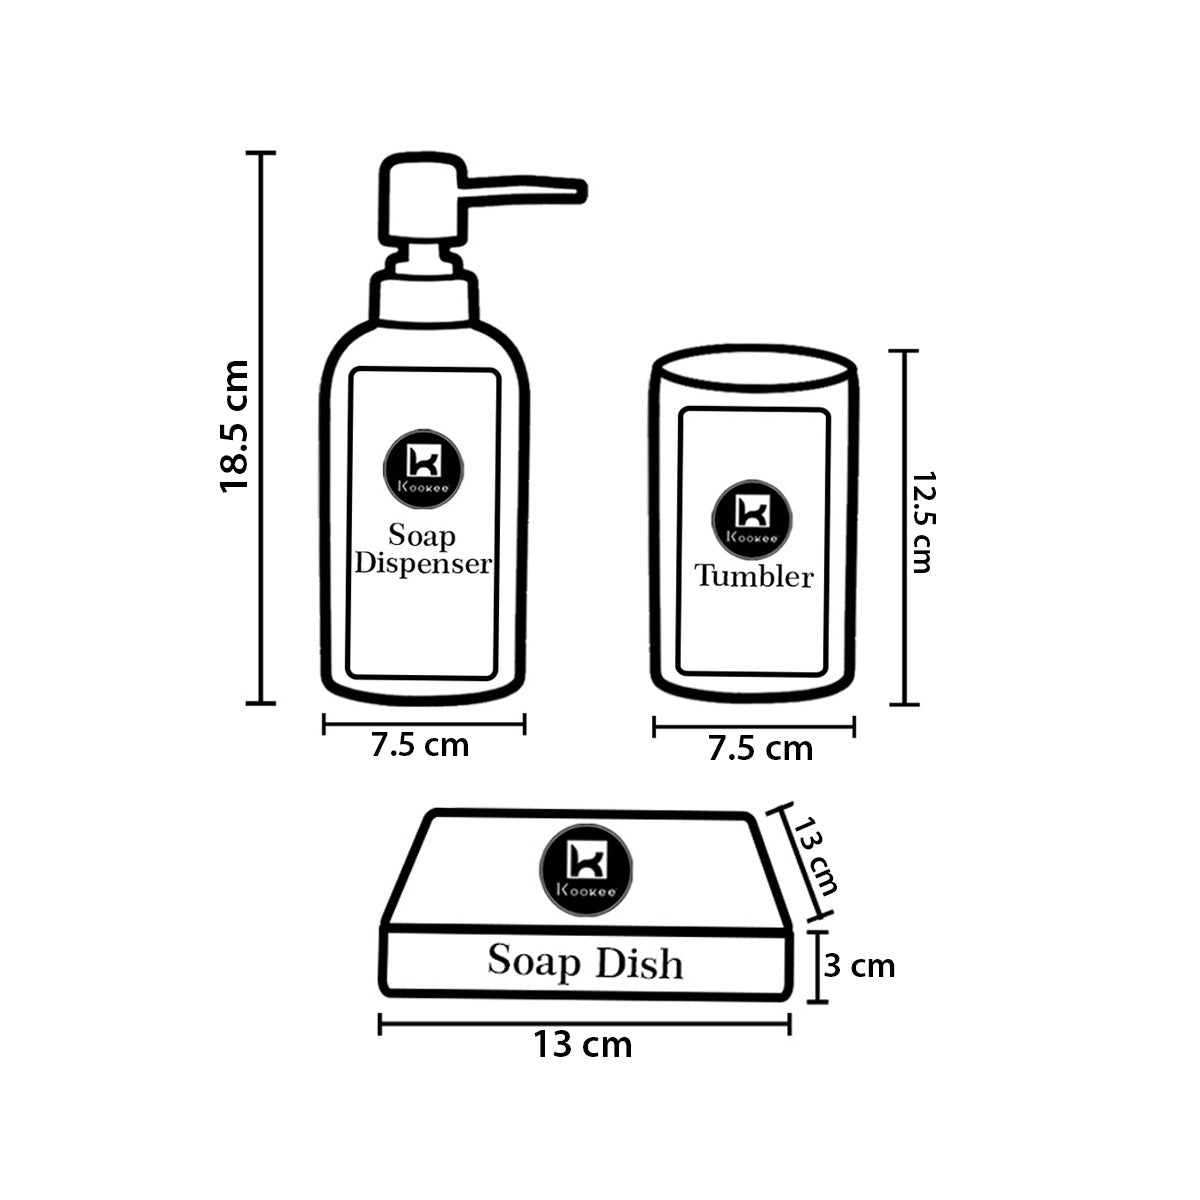 Ceramic Bathroom Accessories Set of 3 Bath Set with Soap Dispenser (8993)